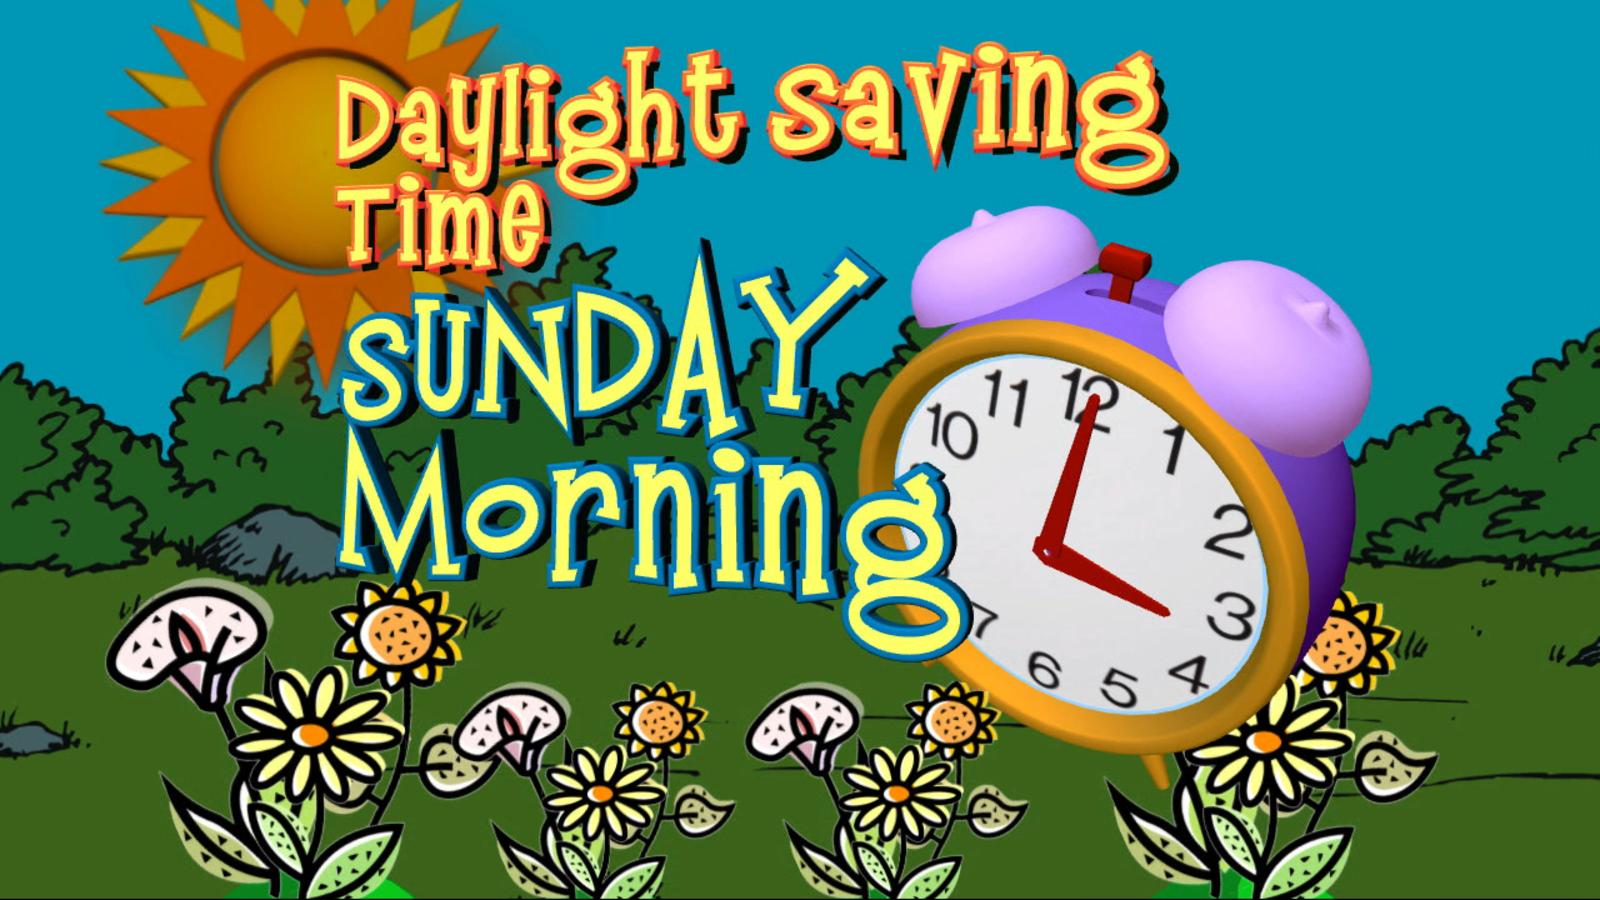 Daylight Saving Time Videos At Abc News Video